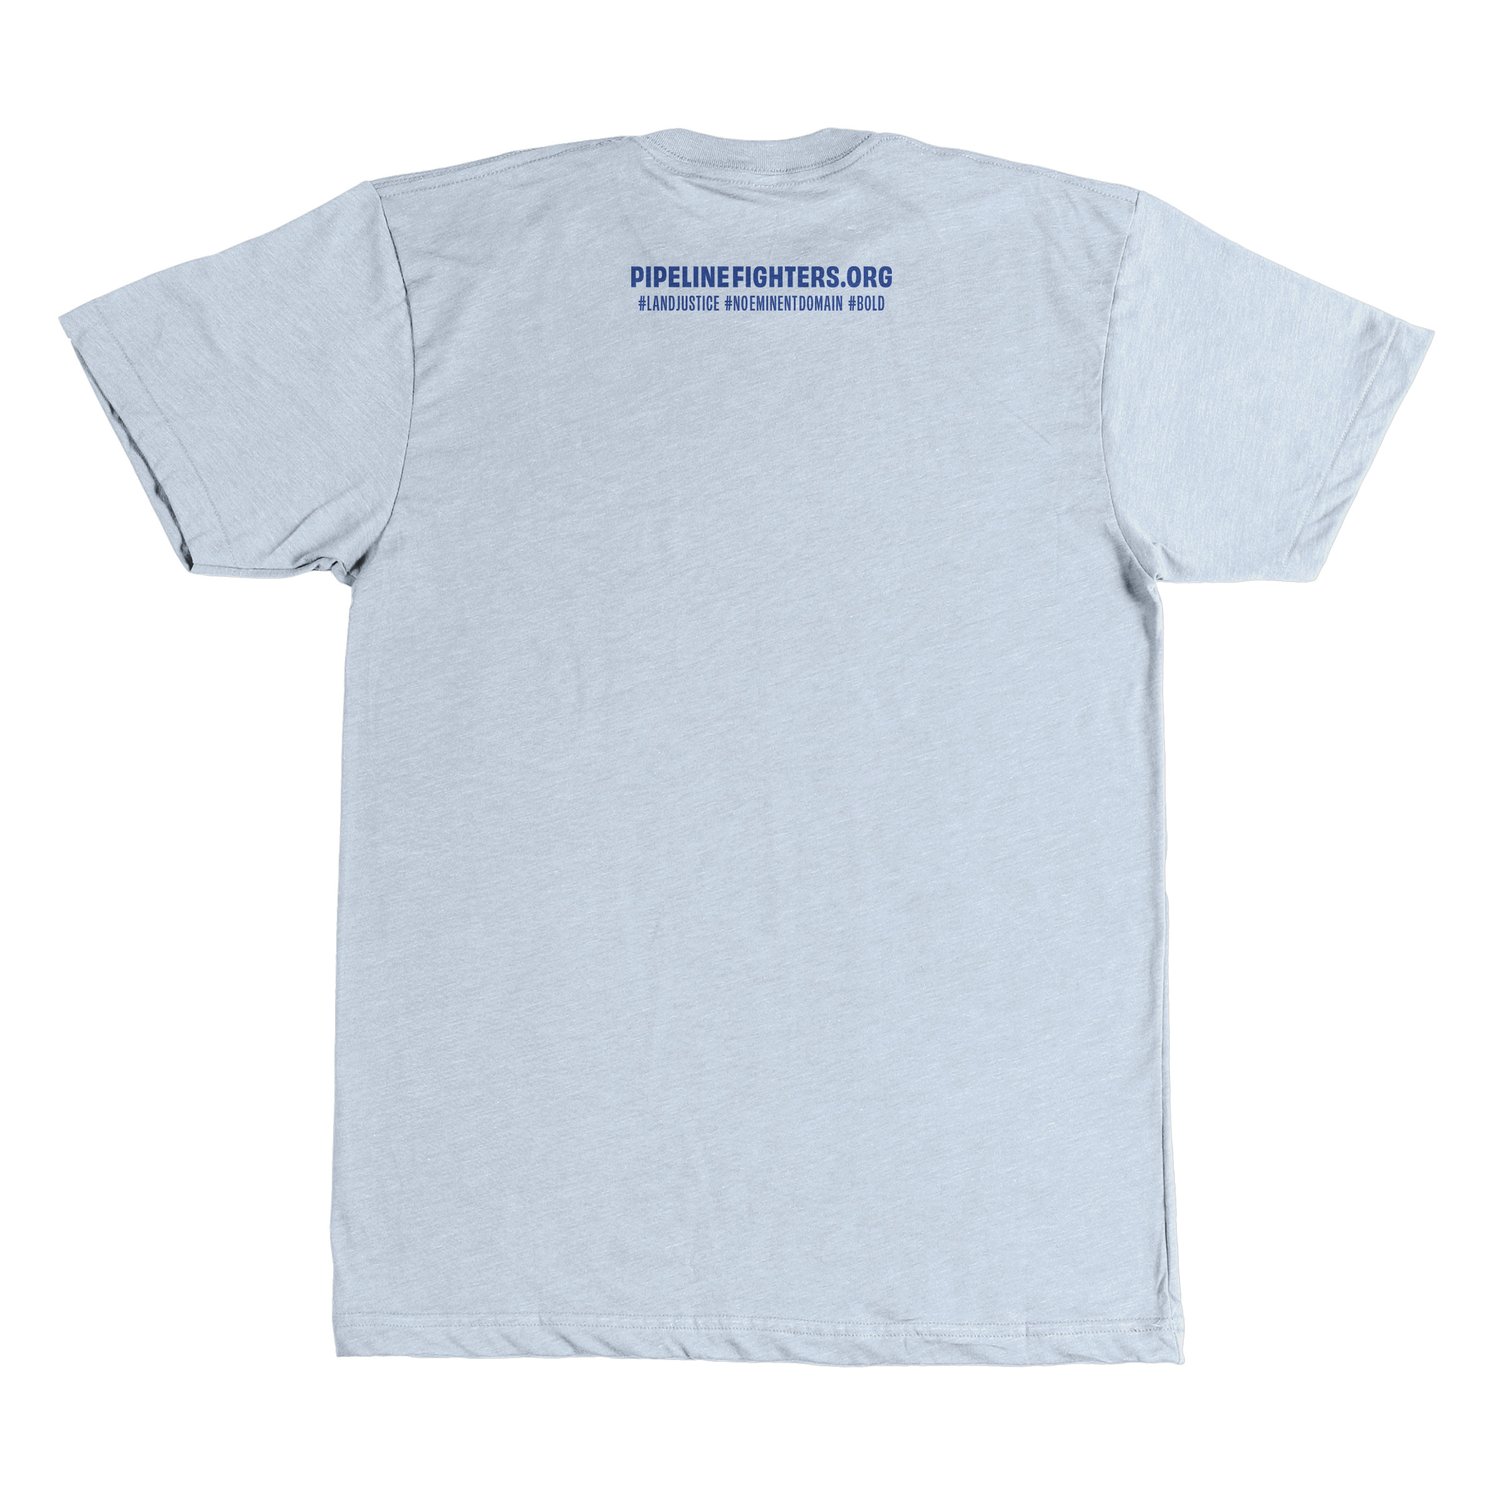 Image of Nebraska Pipeline Fighter t-shirt (grey short sleeve)